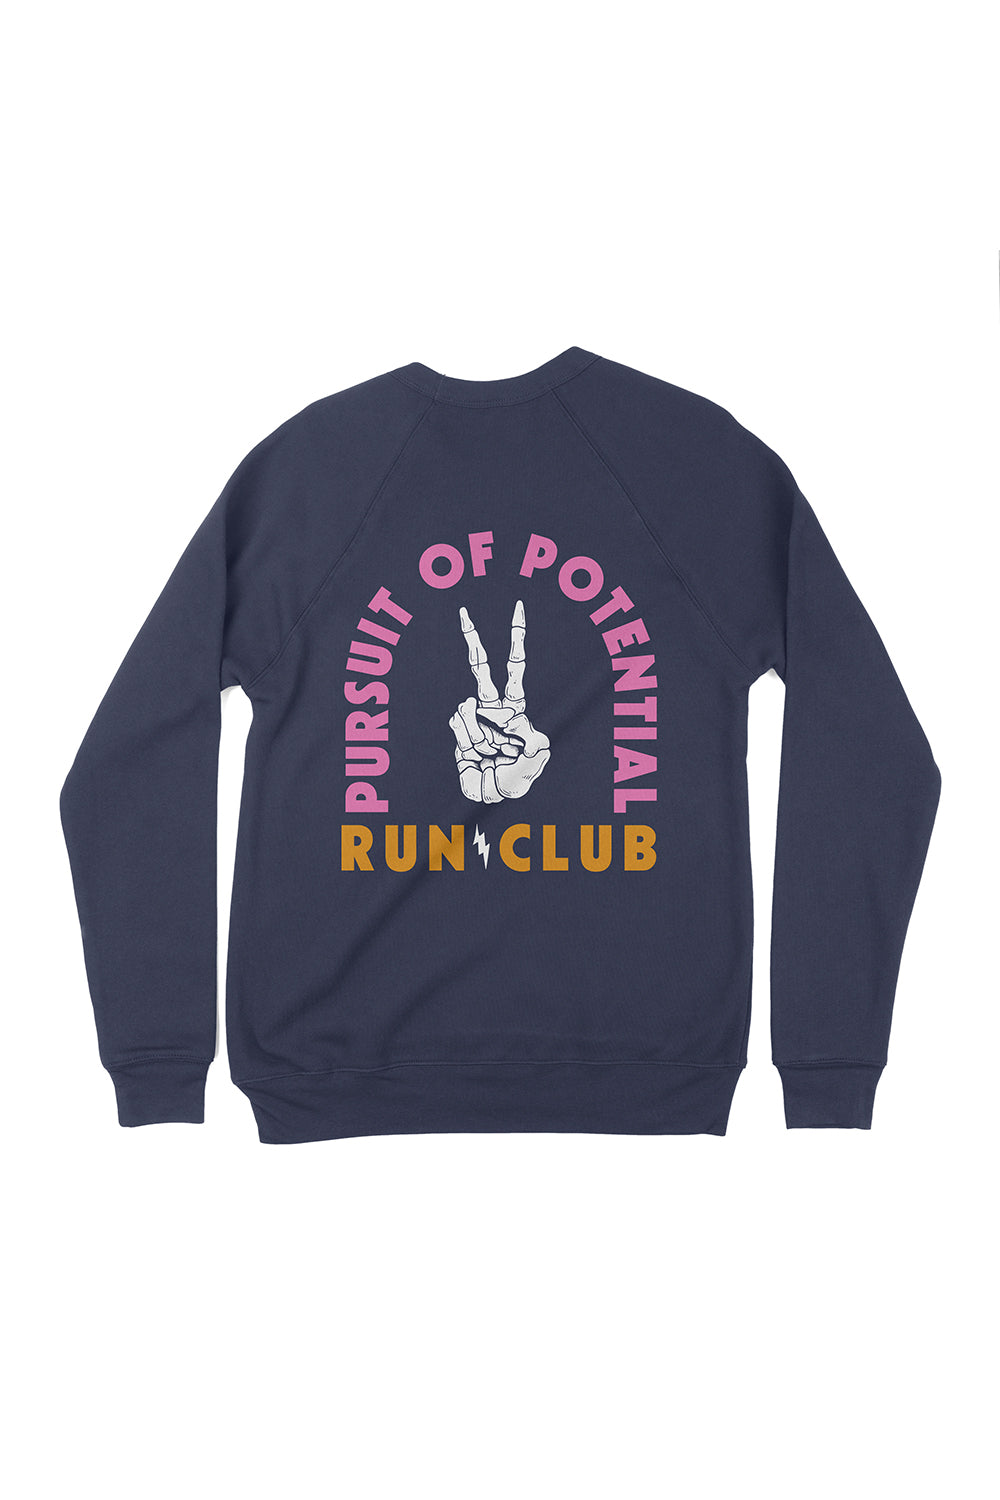 Pursuit of Potential Run Club Sweatshirt